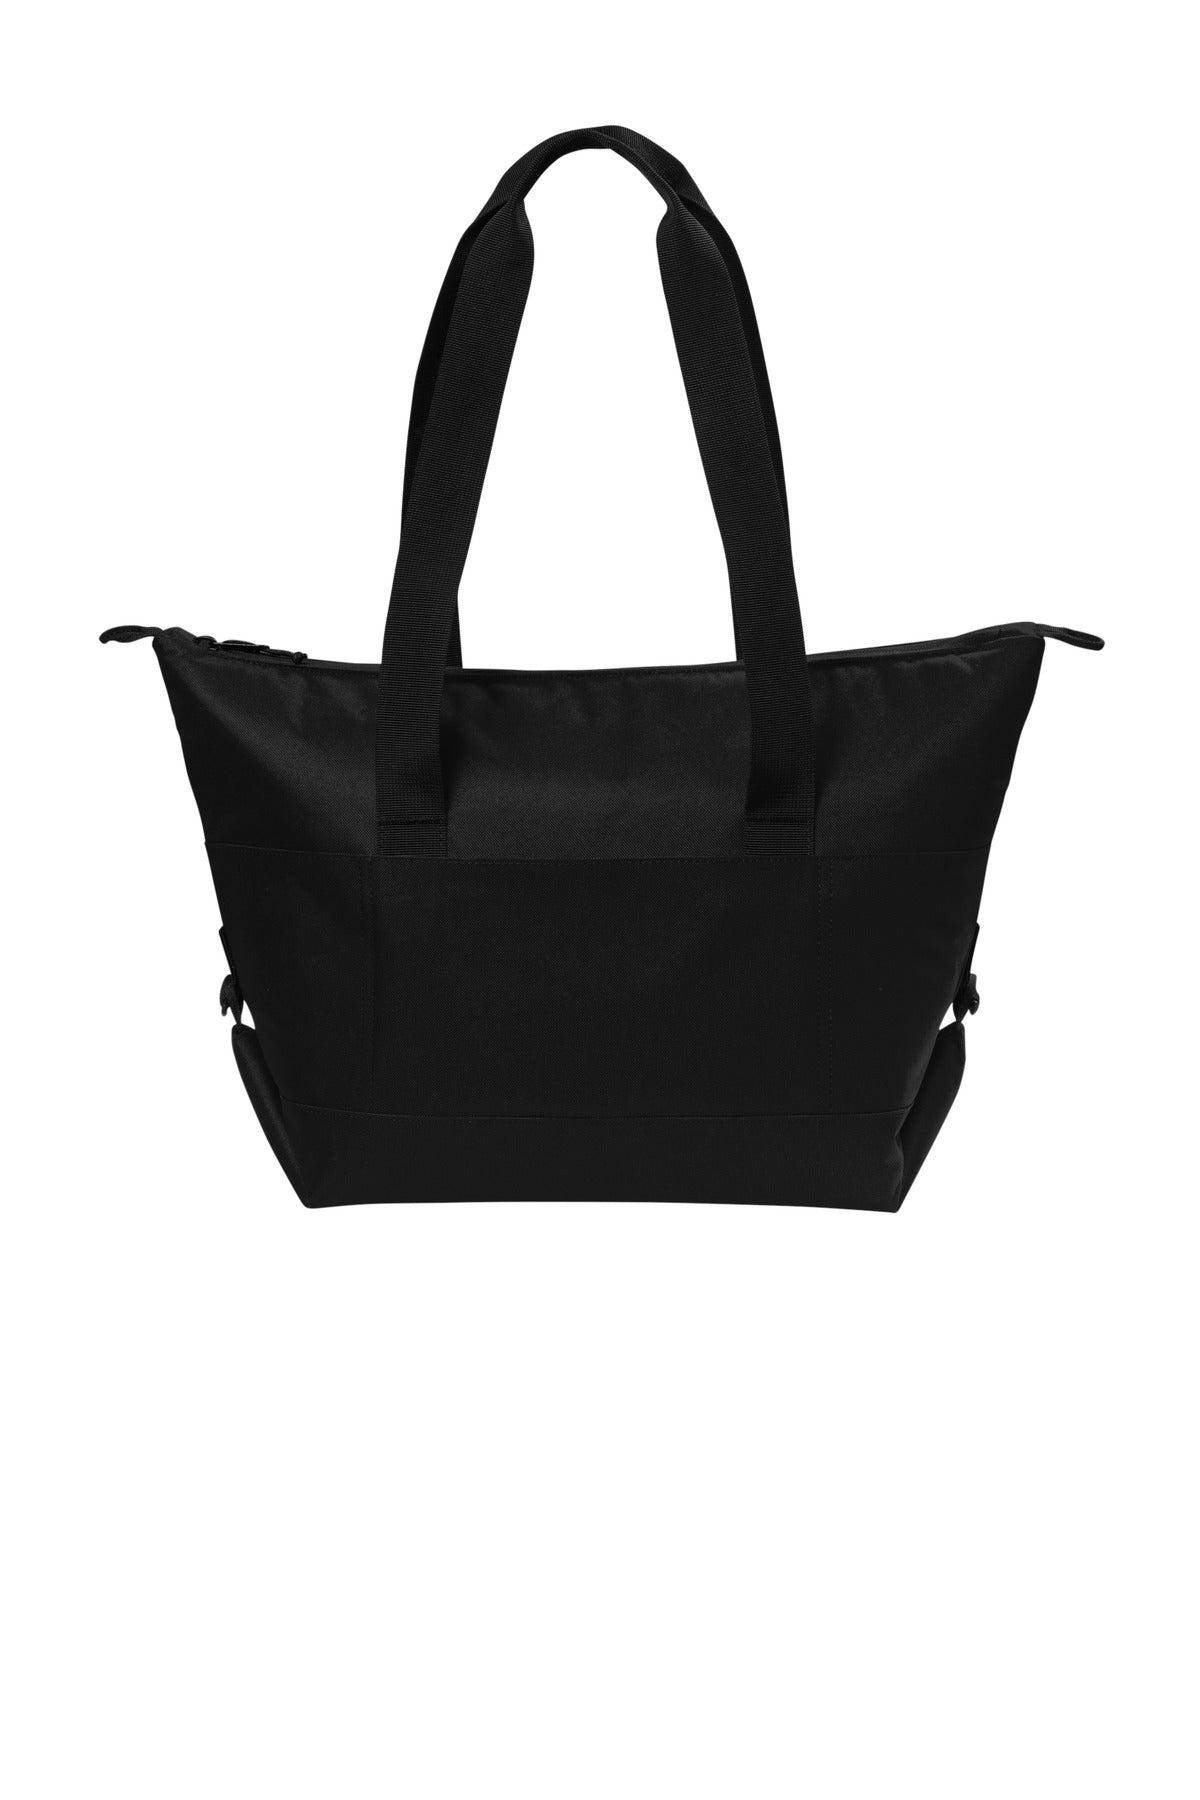 Photo of Port Authority Bags BG516  color  Black